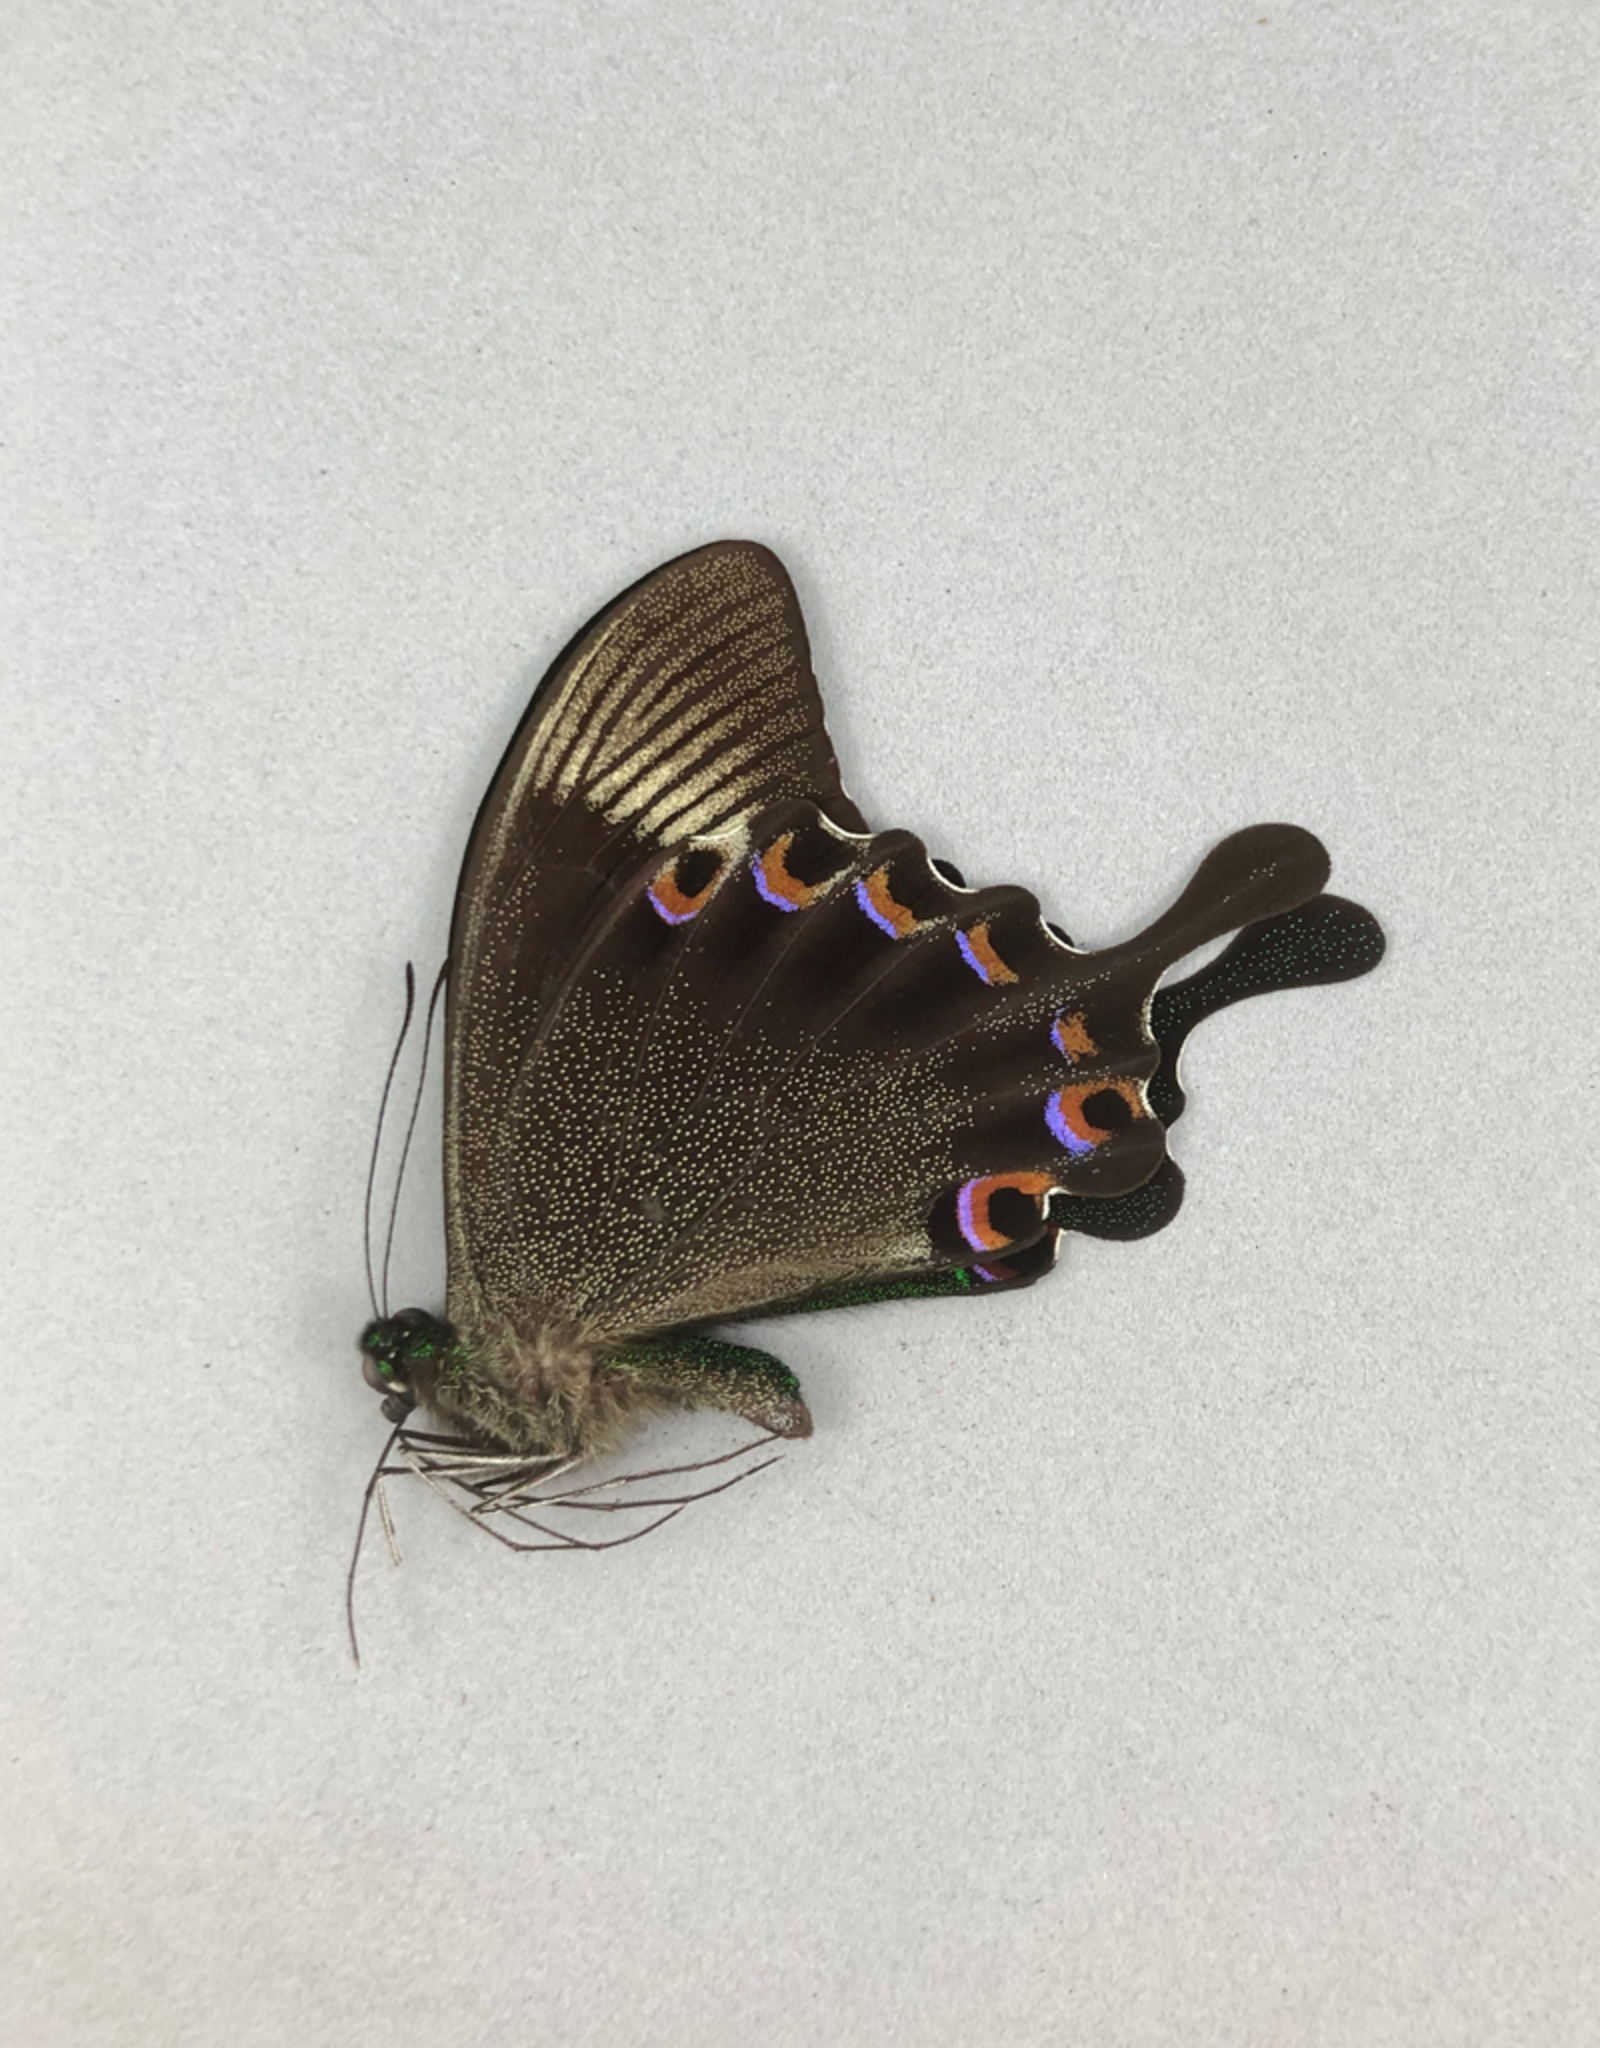 Papilio paris gedeensis M A1 Indonesia